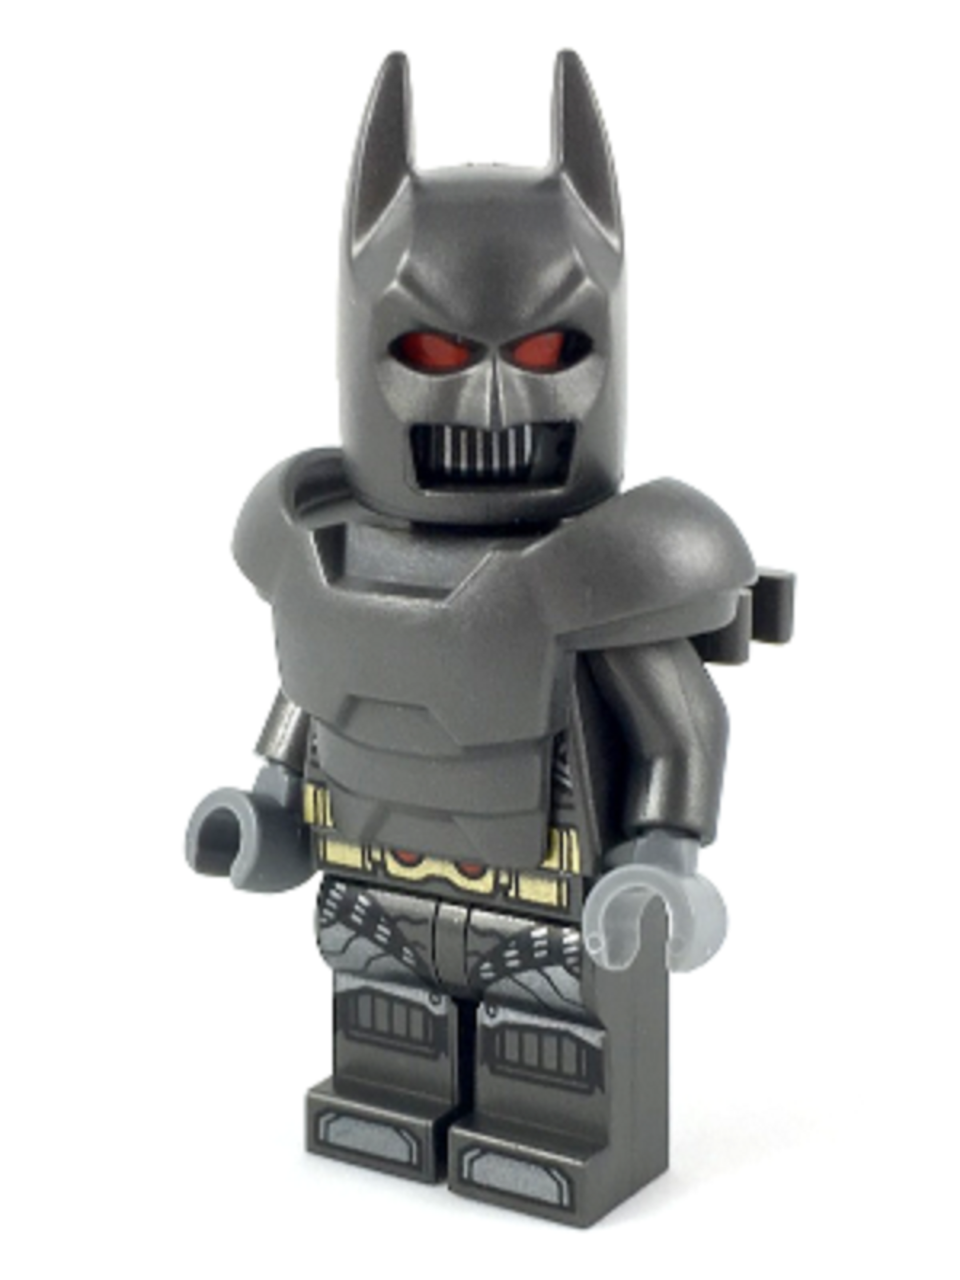 LEGO DC Superheroes: Batman Minifigure with Jet Ski and Bat-a-Rang 